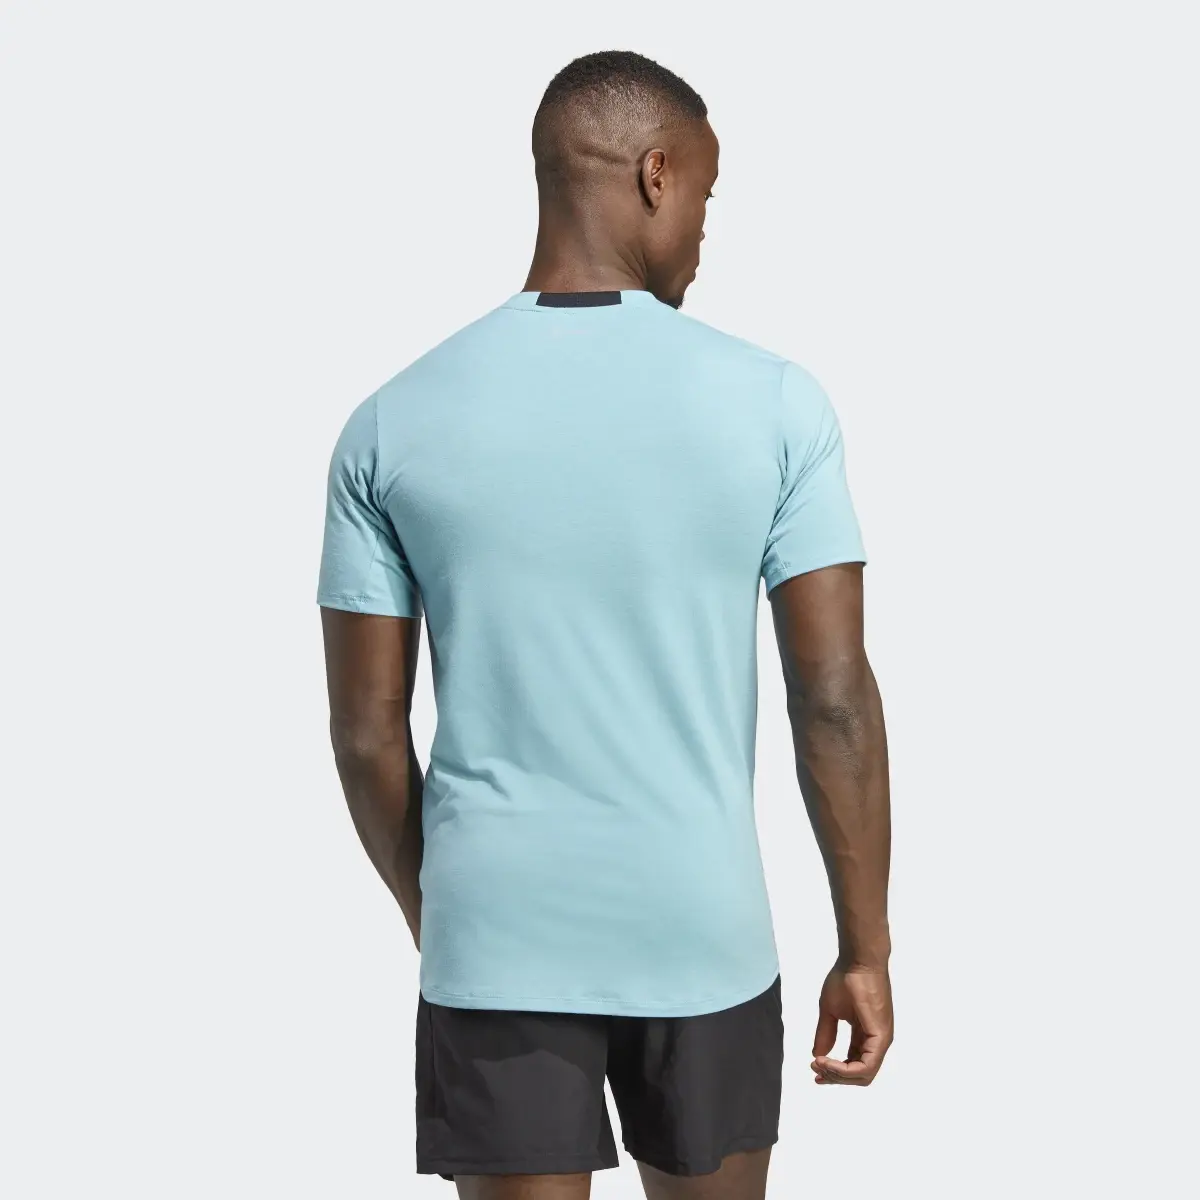 Adidas T-shirt Designed for Training. 3